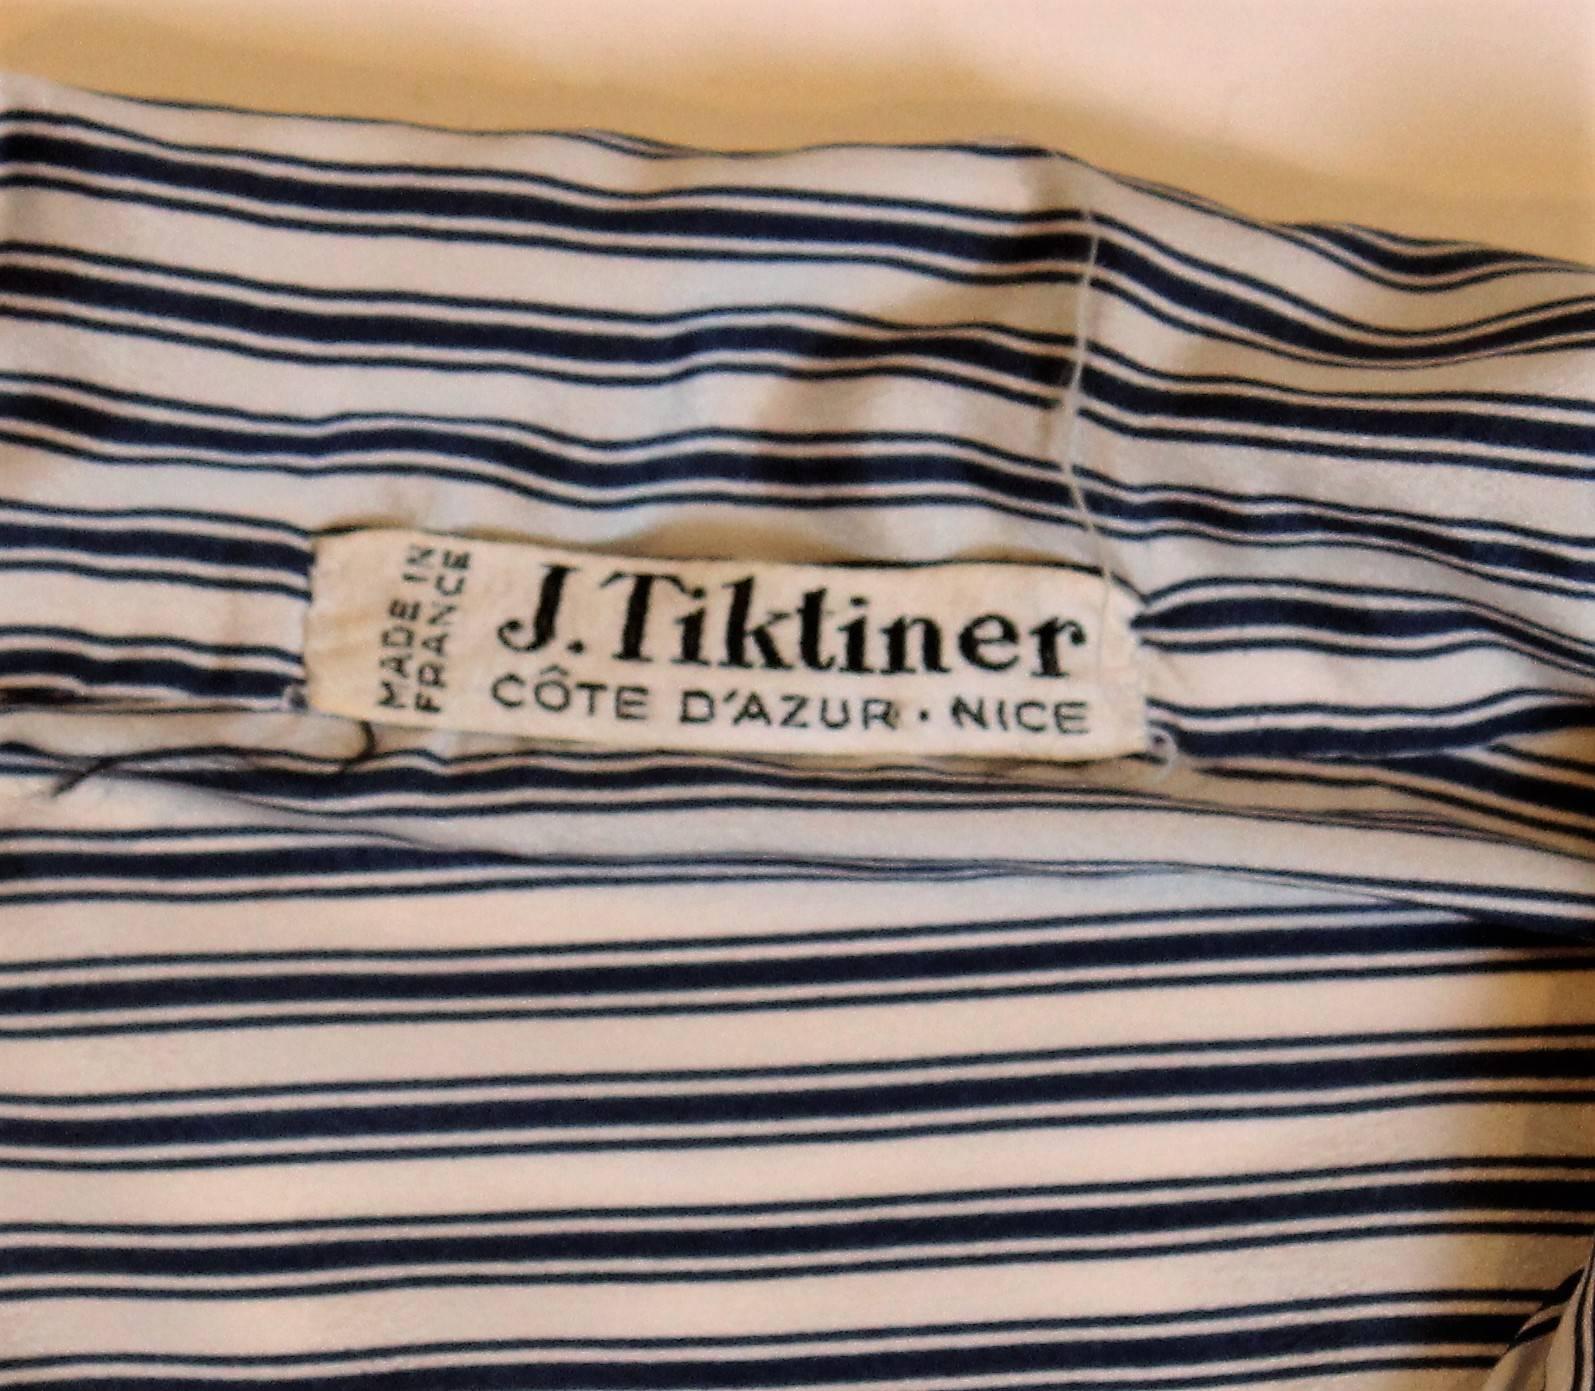  Vintage Stripe Shirtwaister by J Tiktiner France For Sale 1